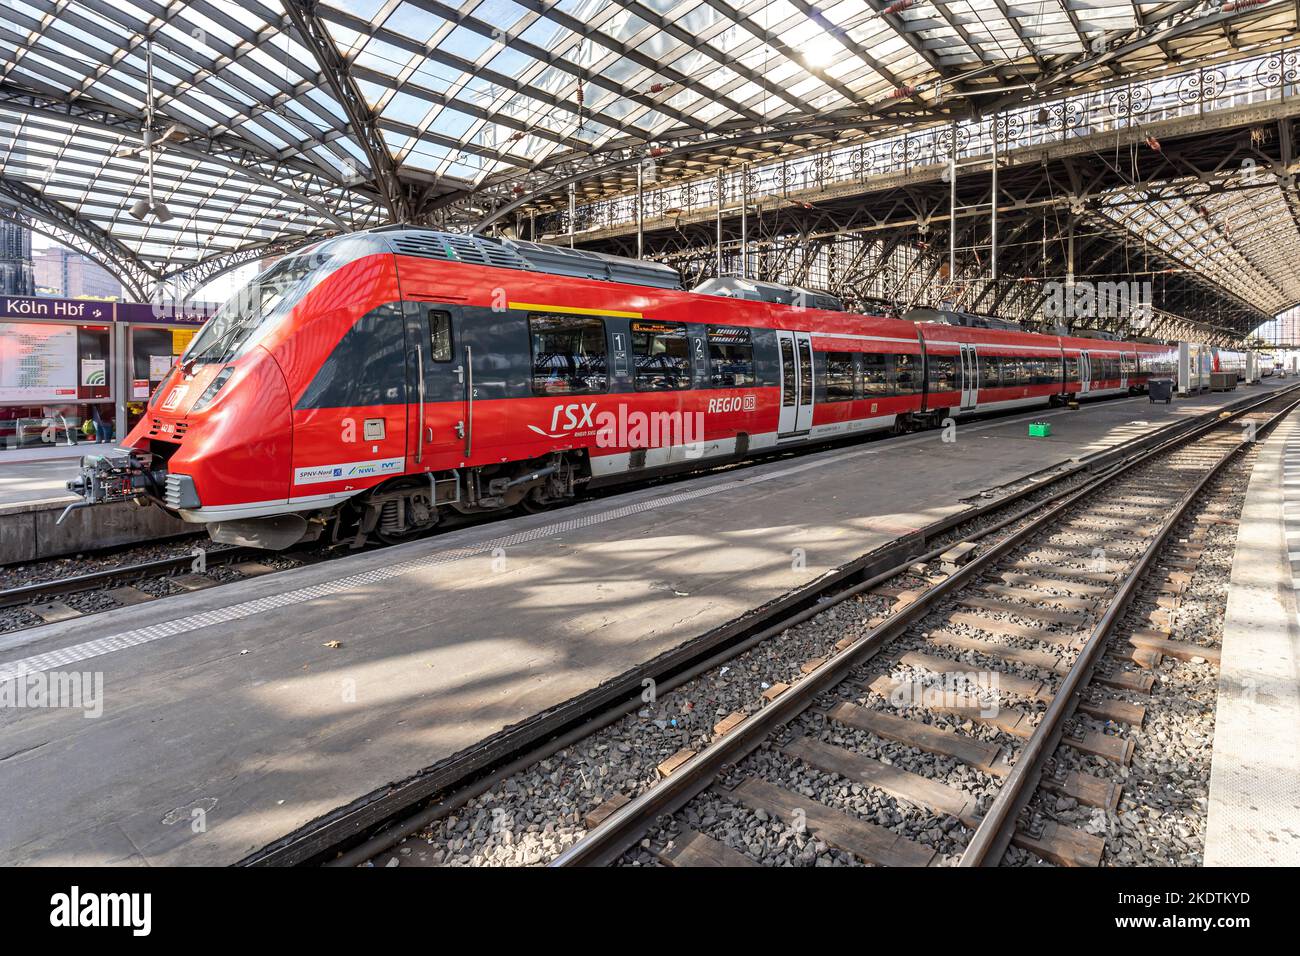 DB Regio Bombardier Talent 2 train at Cologne main station Stock Photo